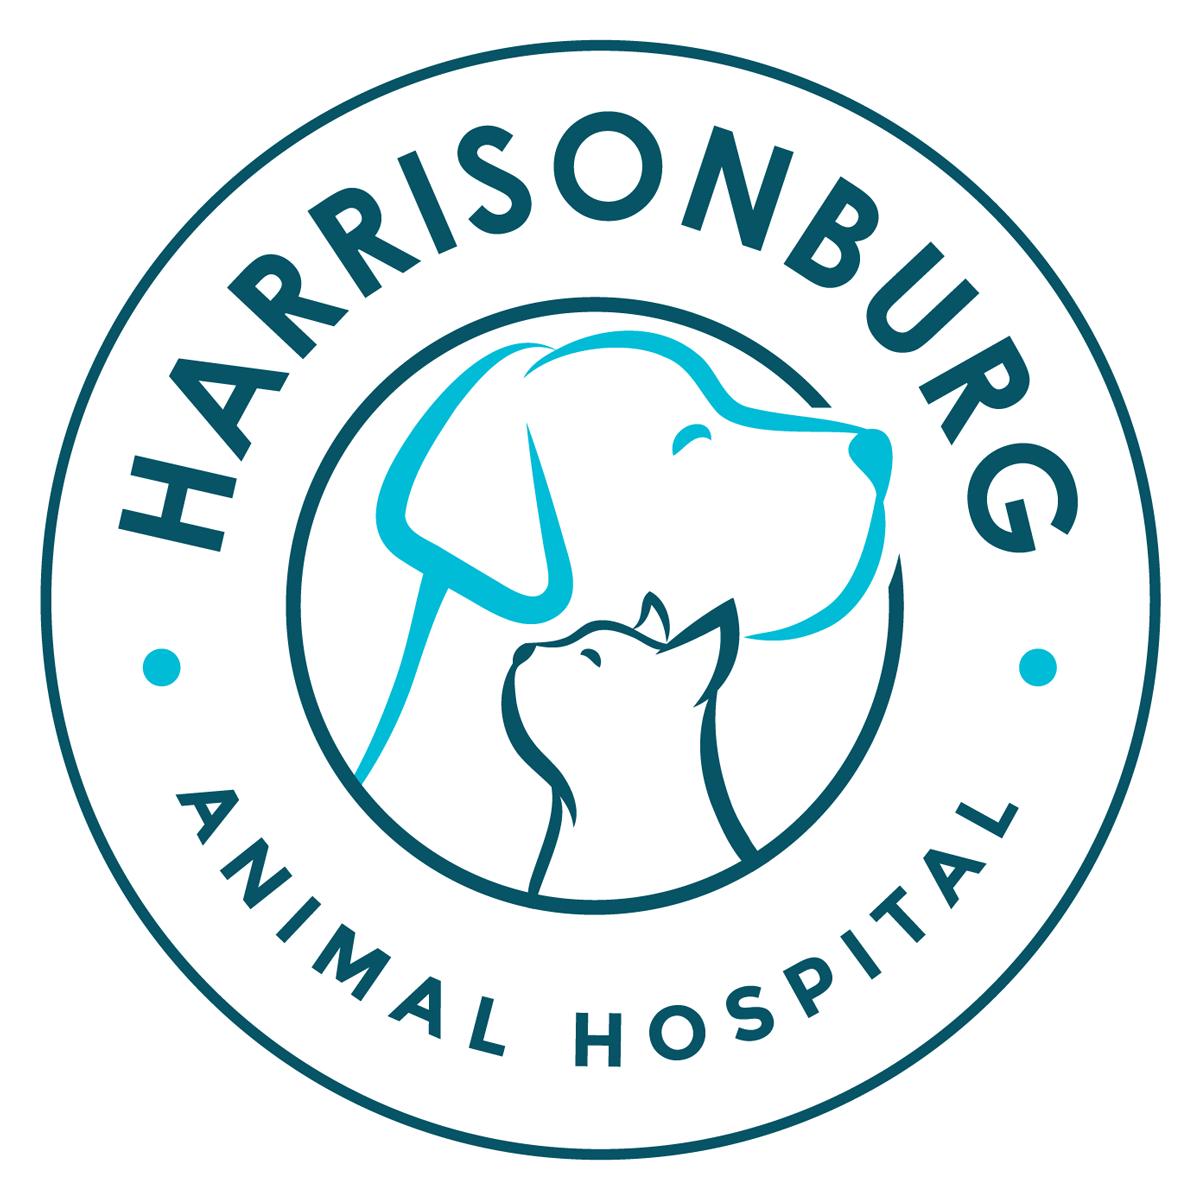 Harrisonburg Animal Hospital